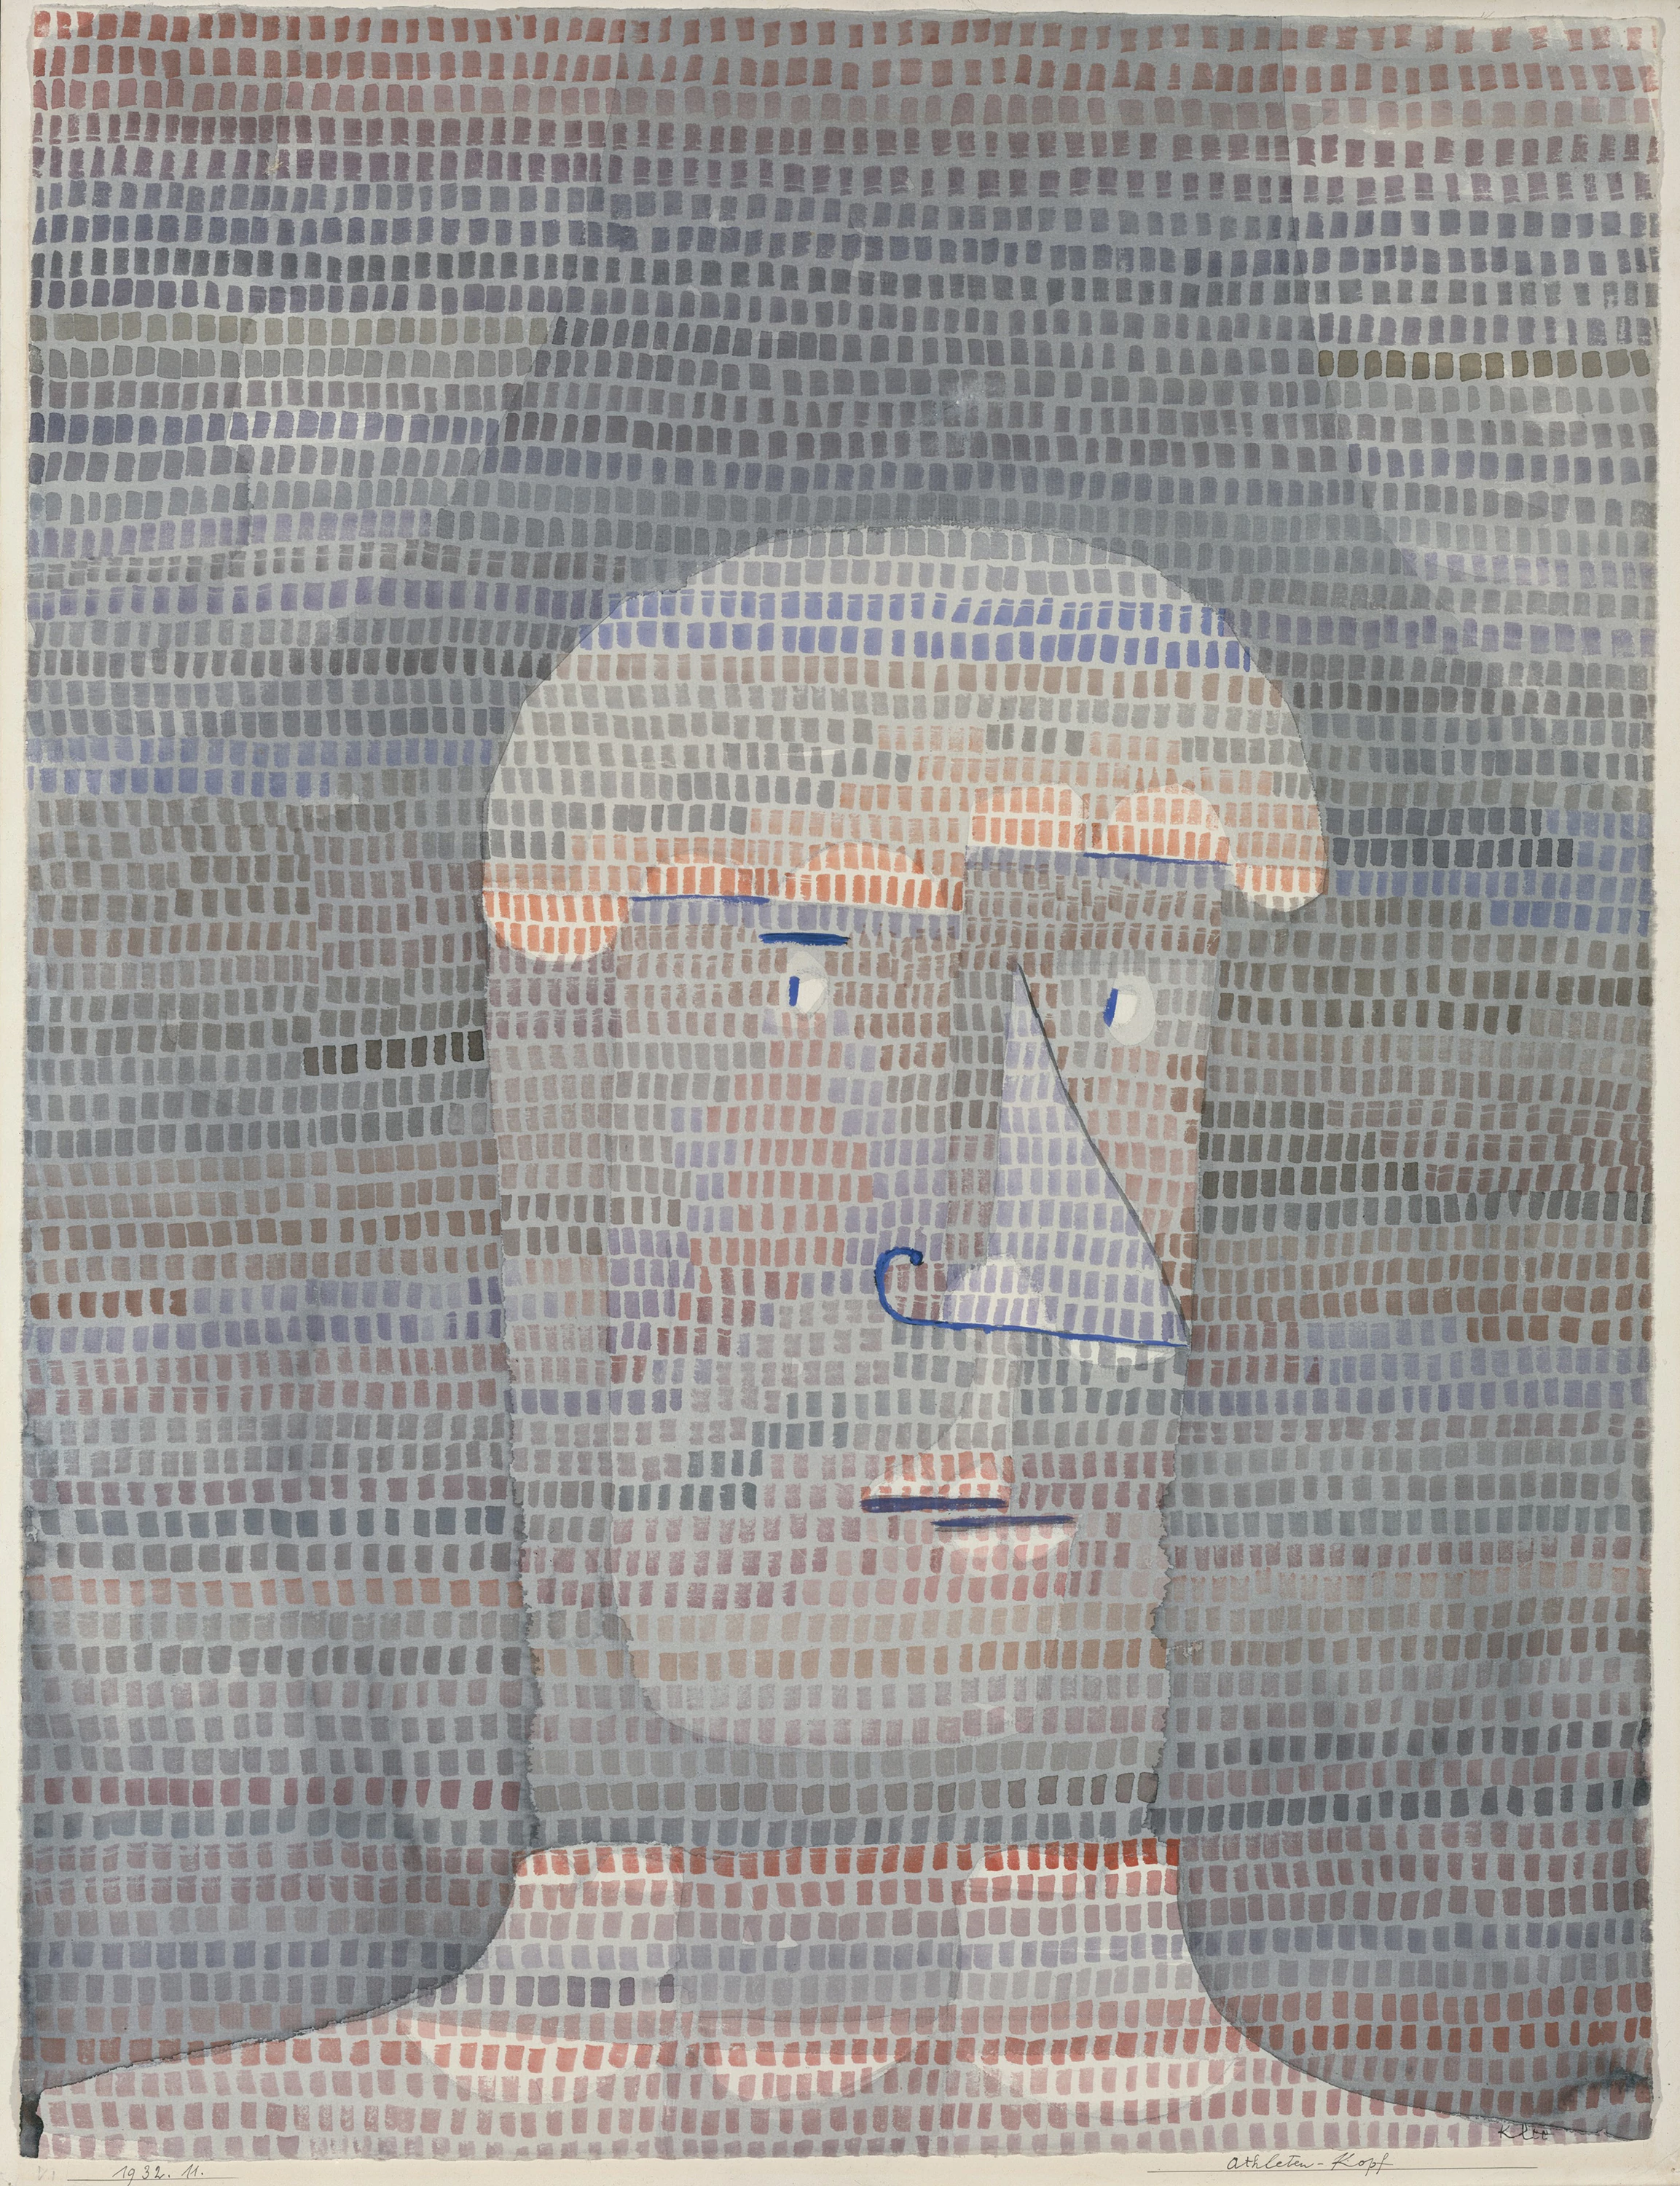 Athlete's Head, Paul Klee